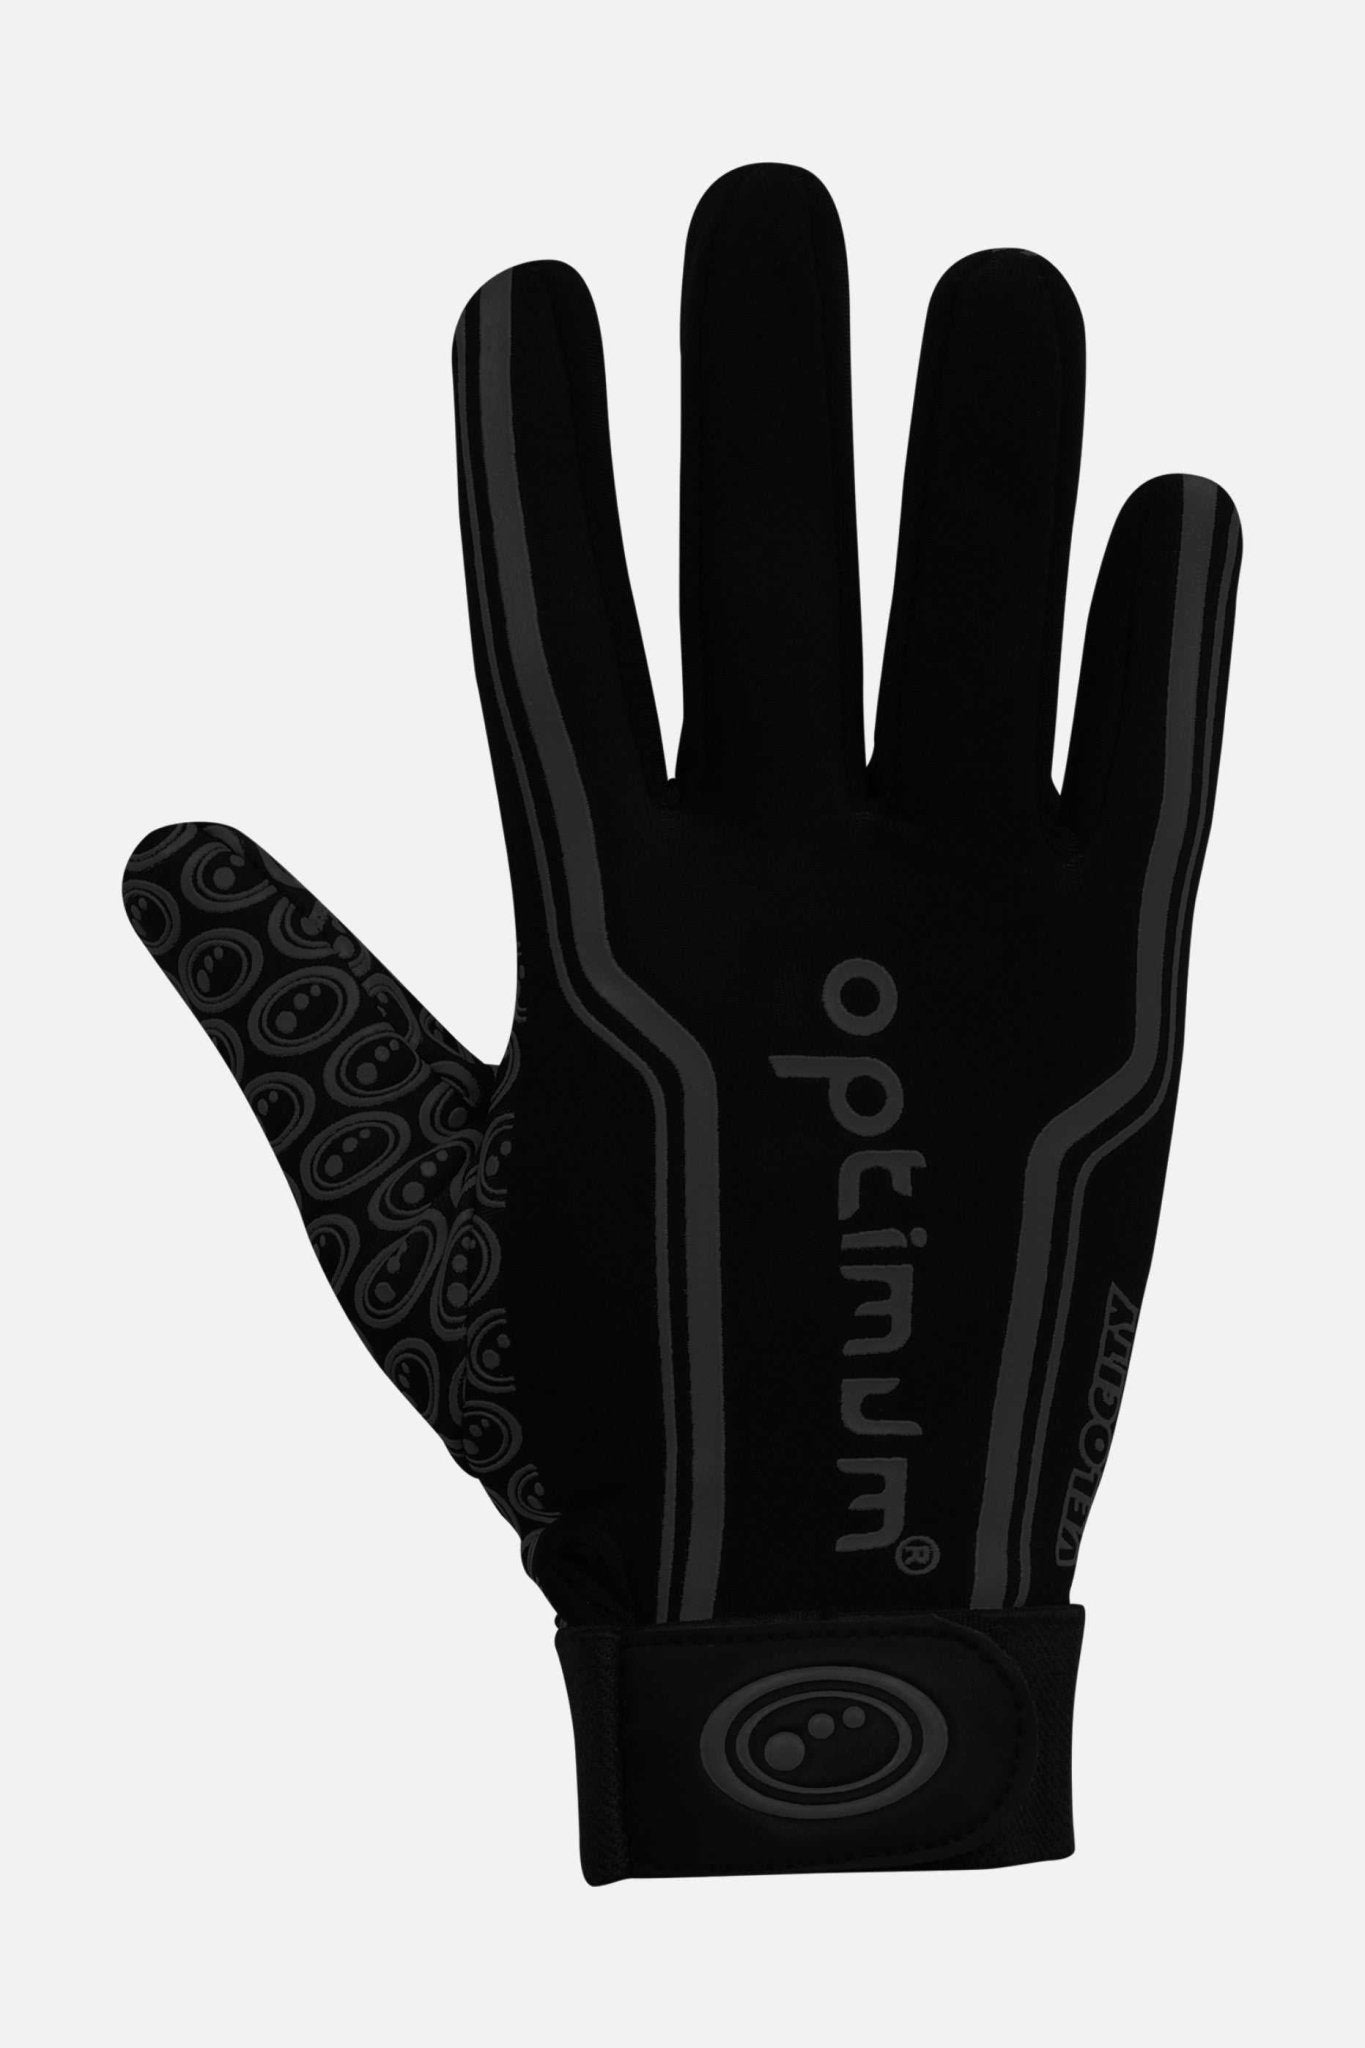 Velocity Thermal Gloves - Optimum